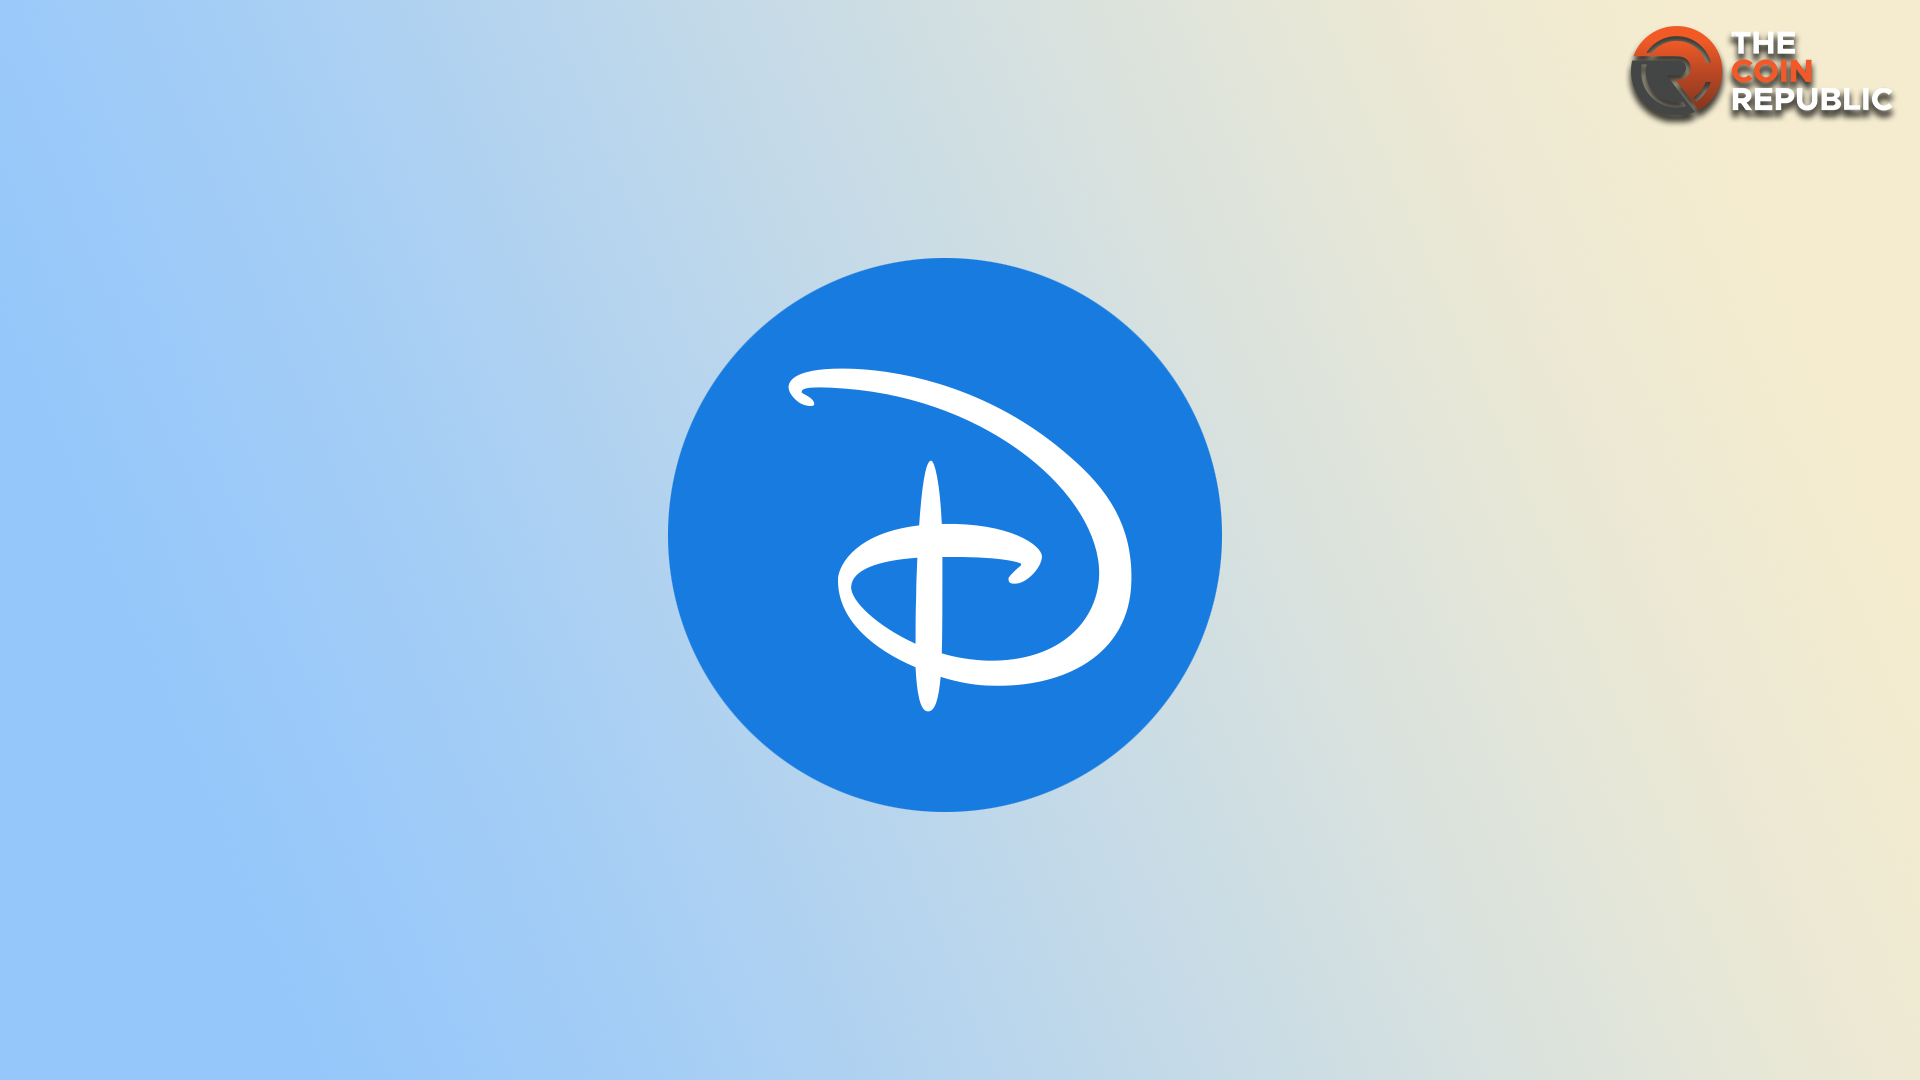 Walt Disney (DIS Stock): DIS stock price Plunges Amidst Dispute